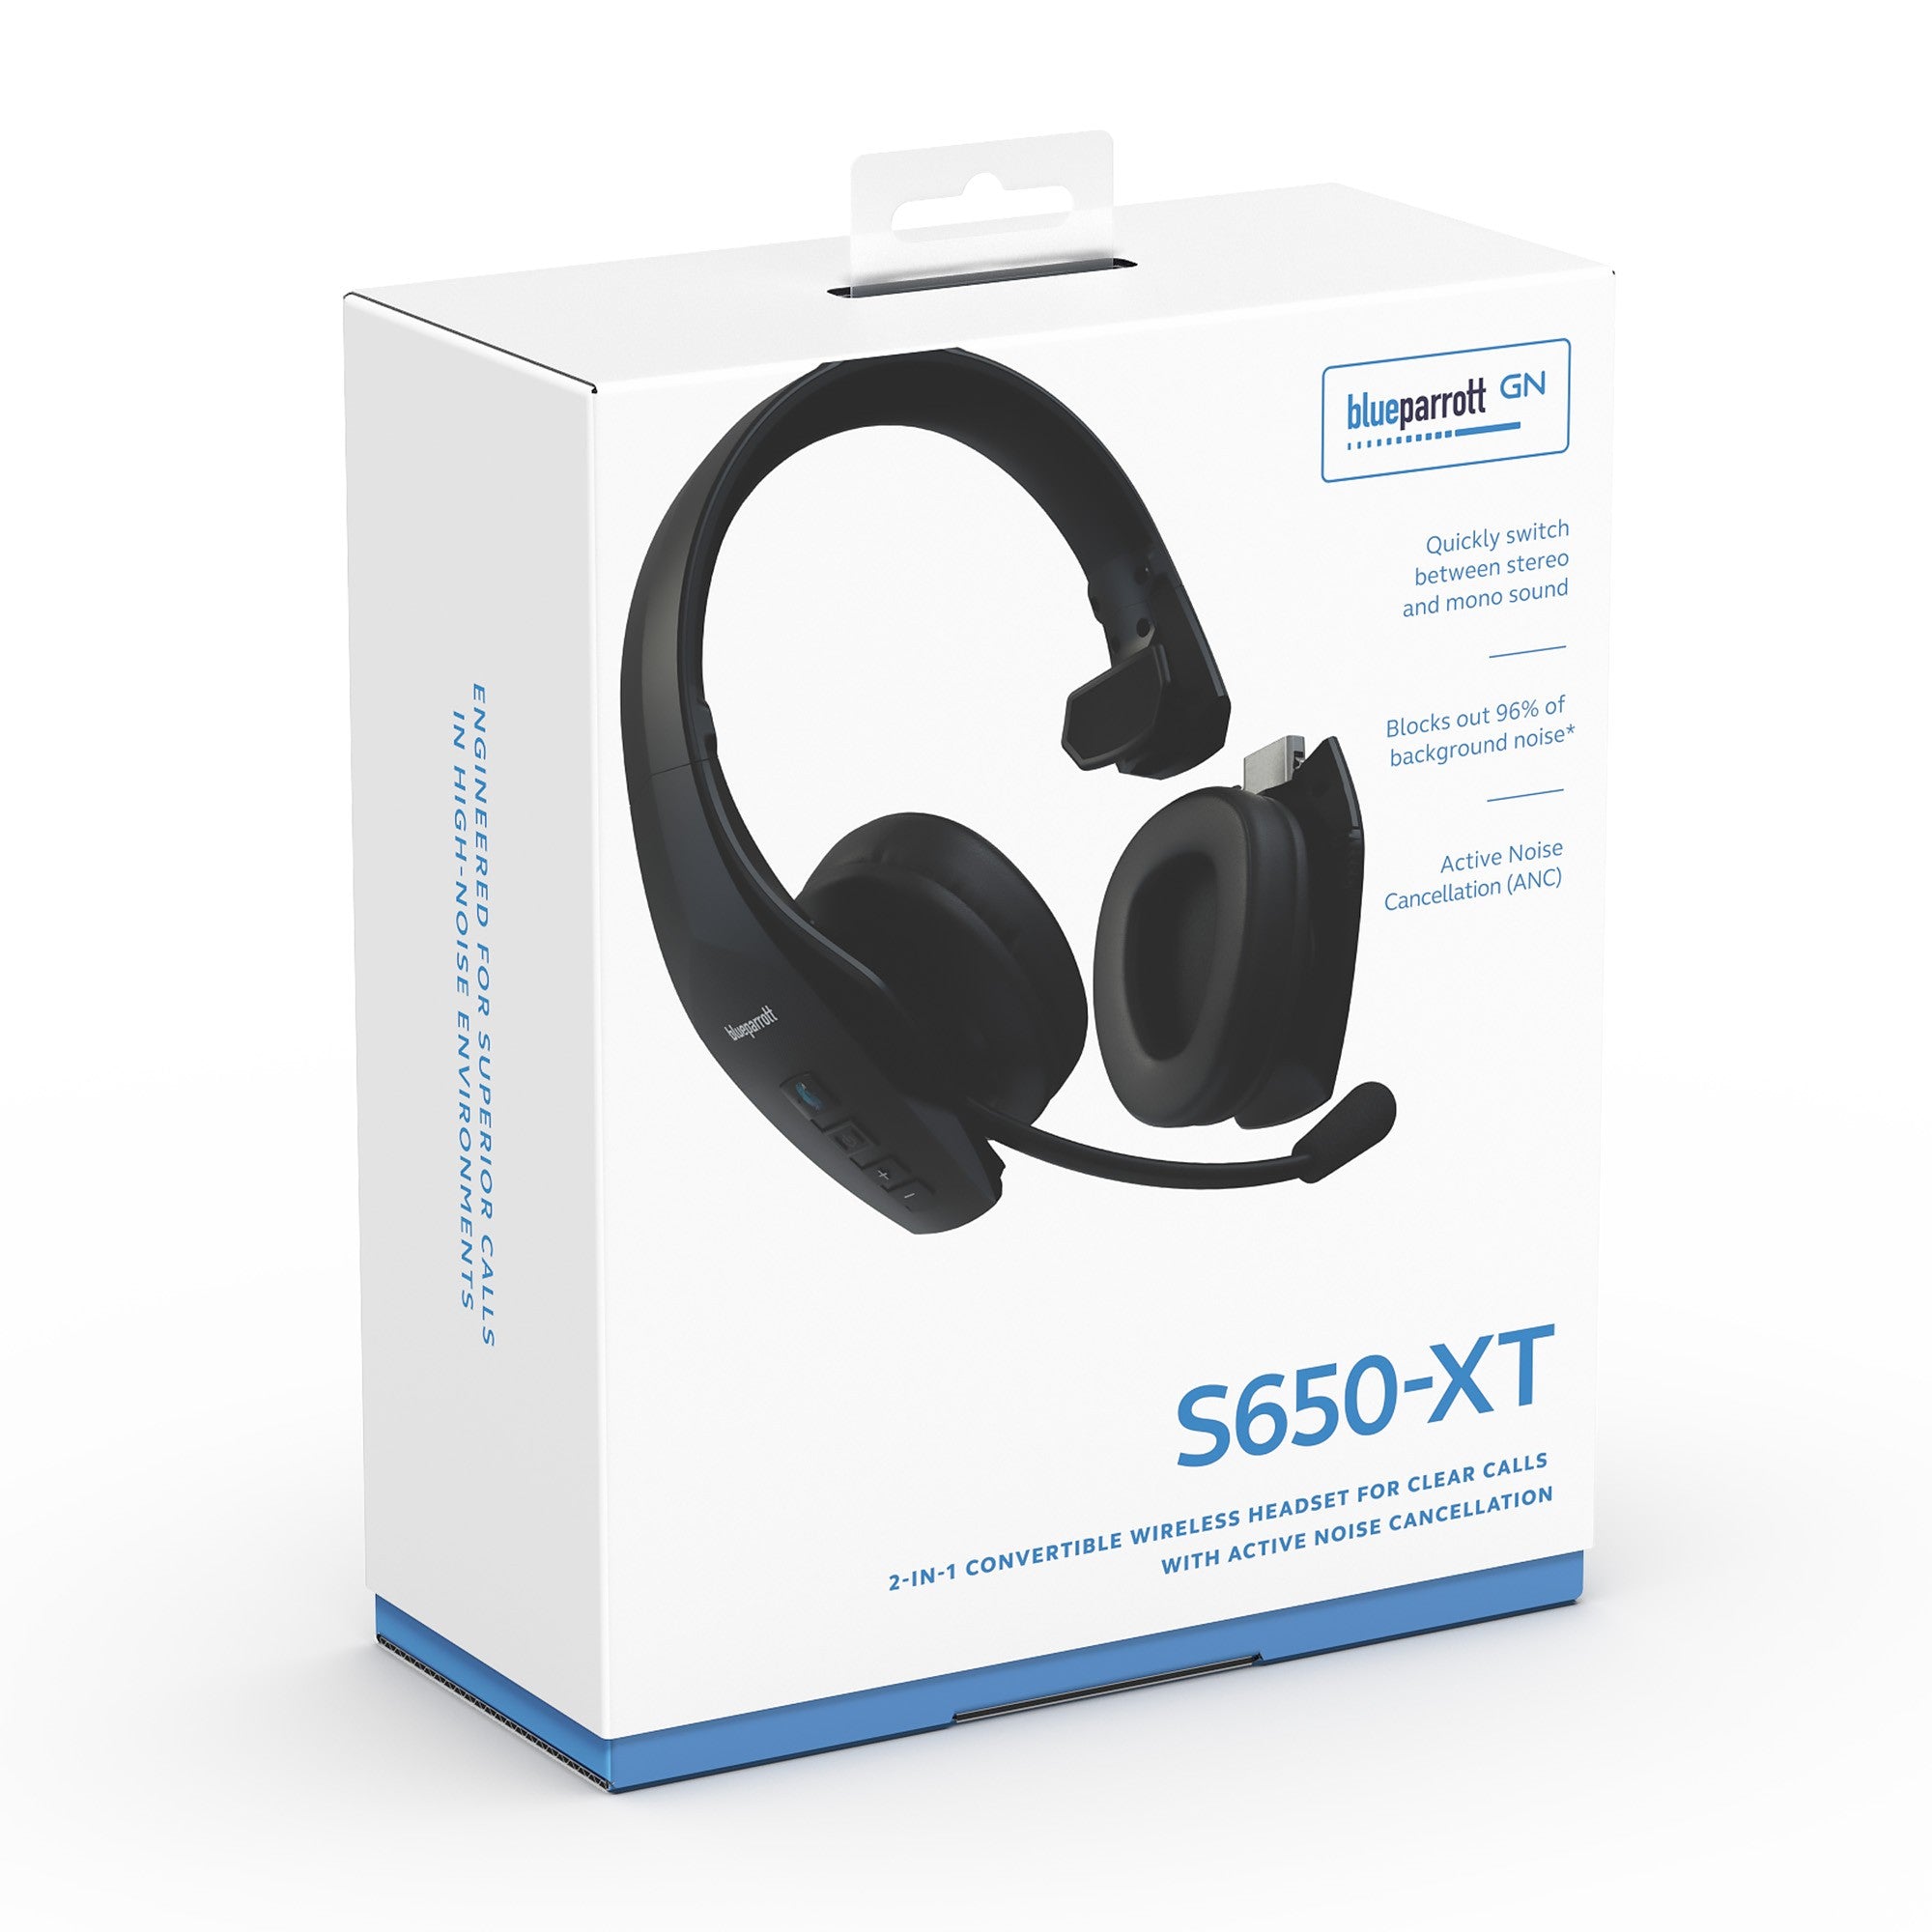 BlueParrott B650-XT Bluetooth Headset - Black - 15-10001